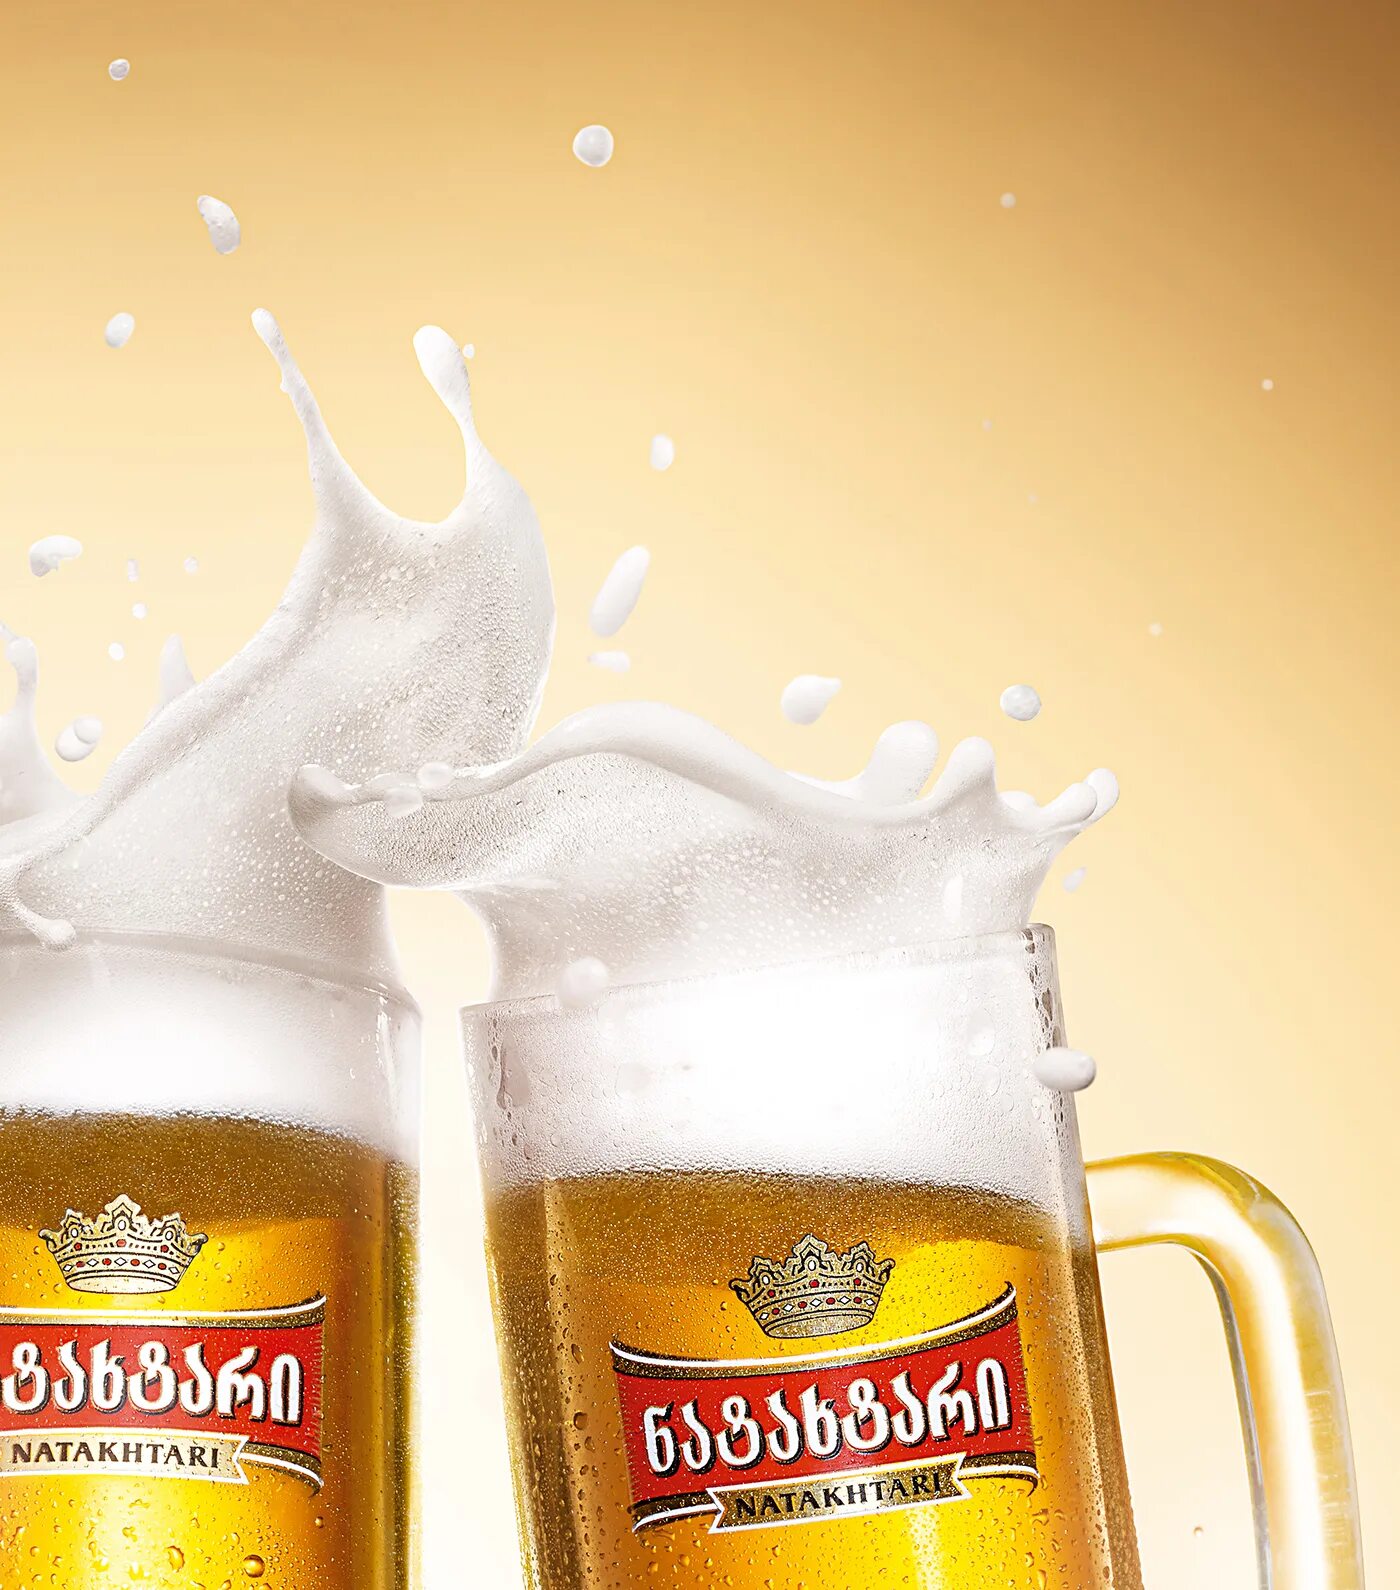 Натахтари пиво купить. Splash пиво. Natakhtari пиво.